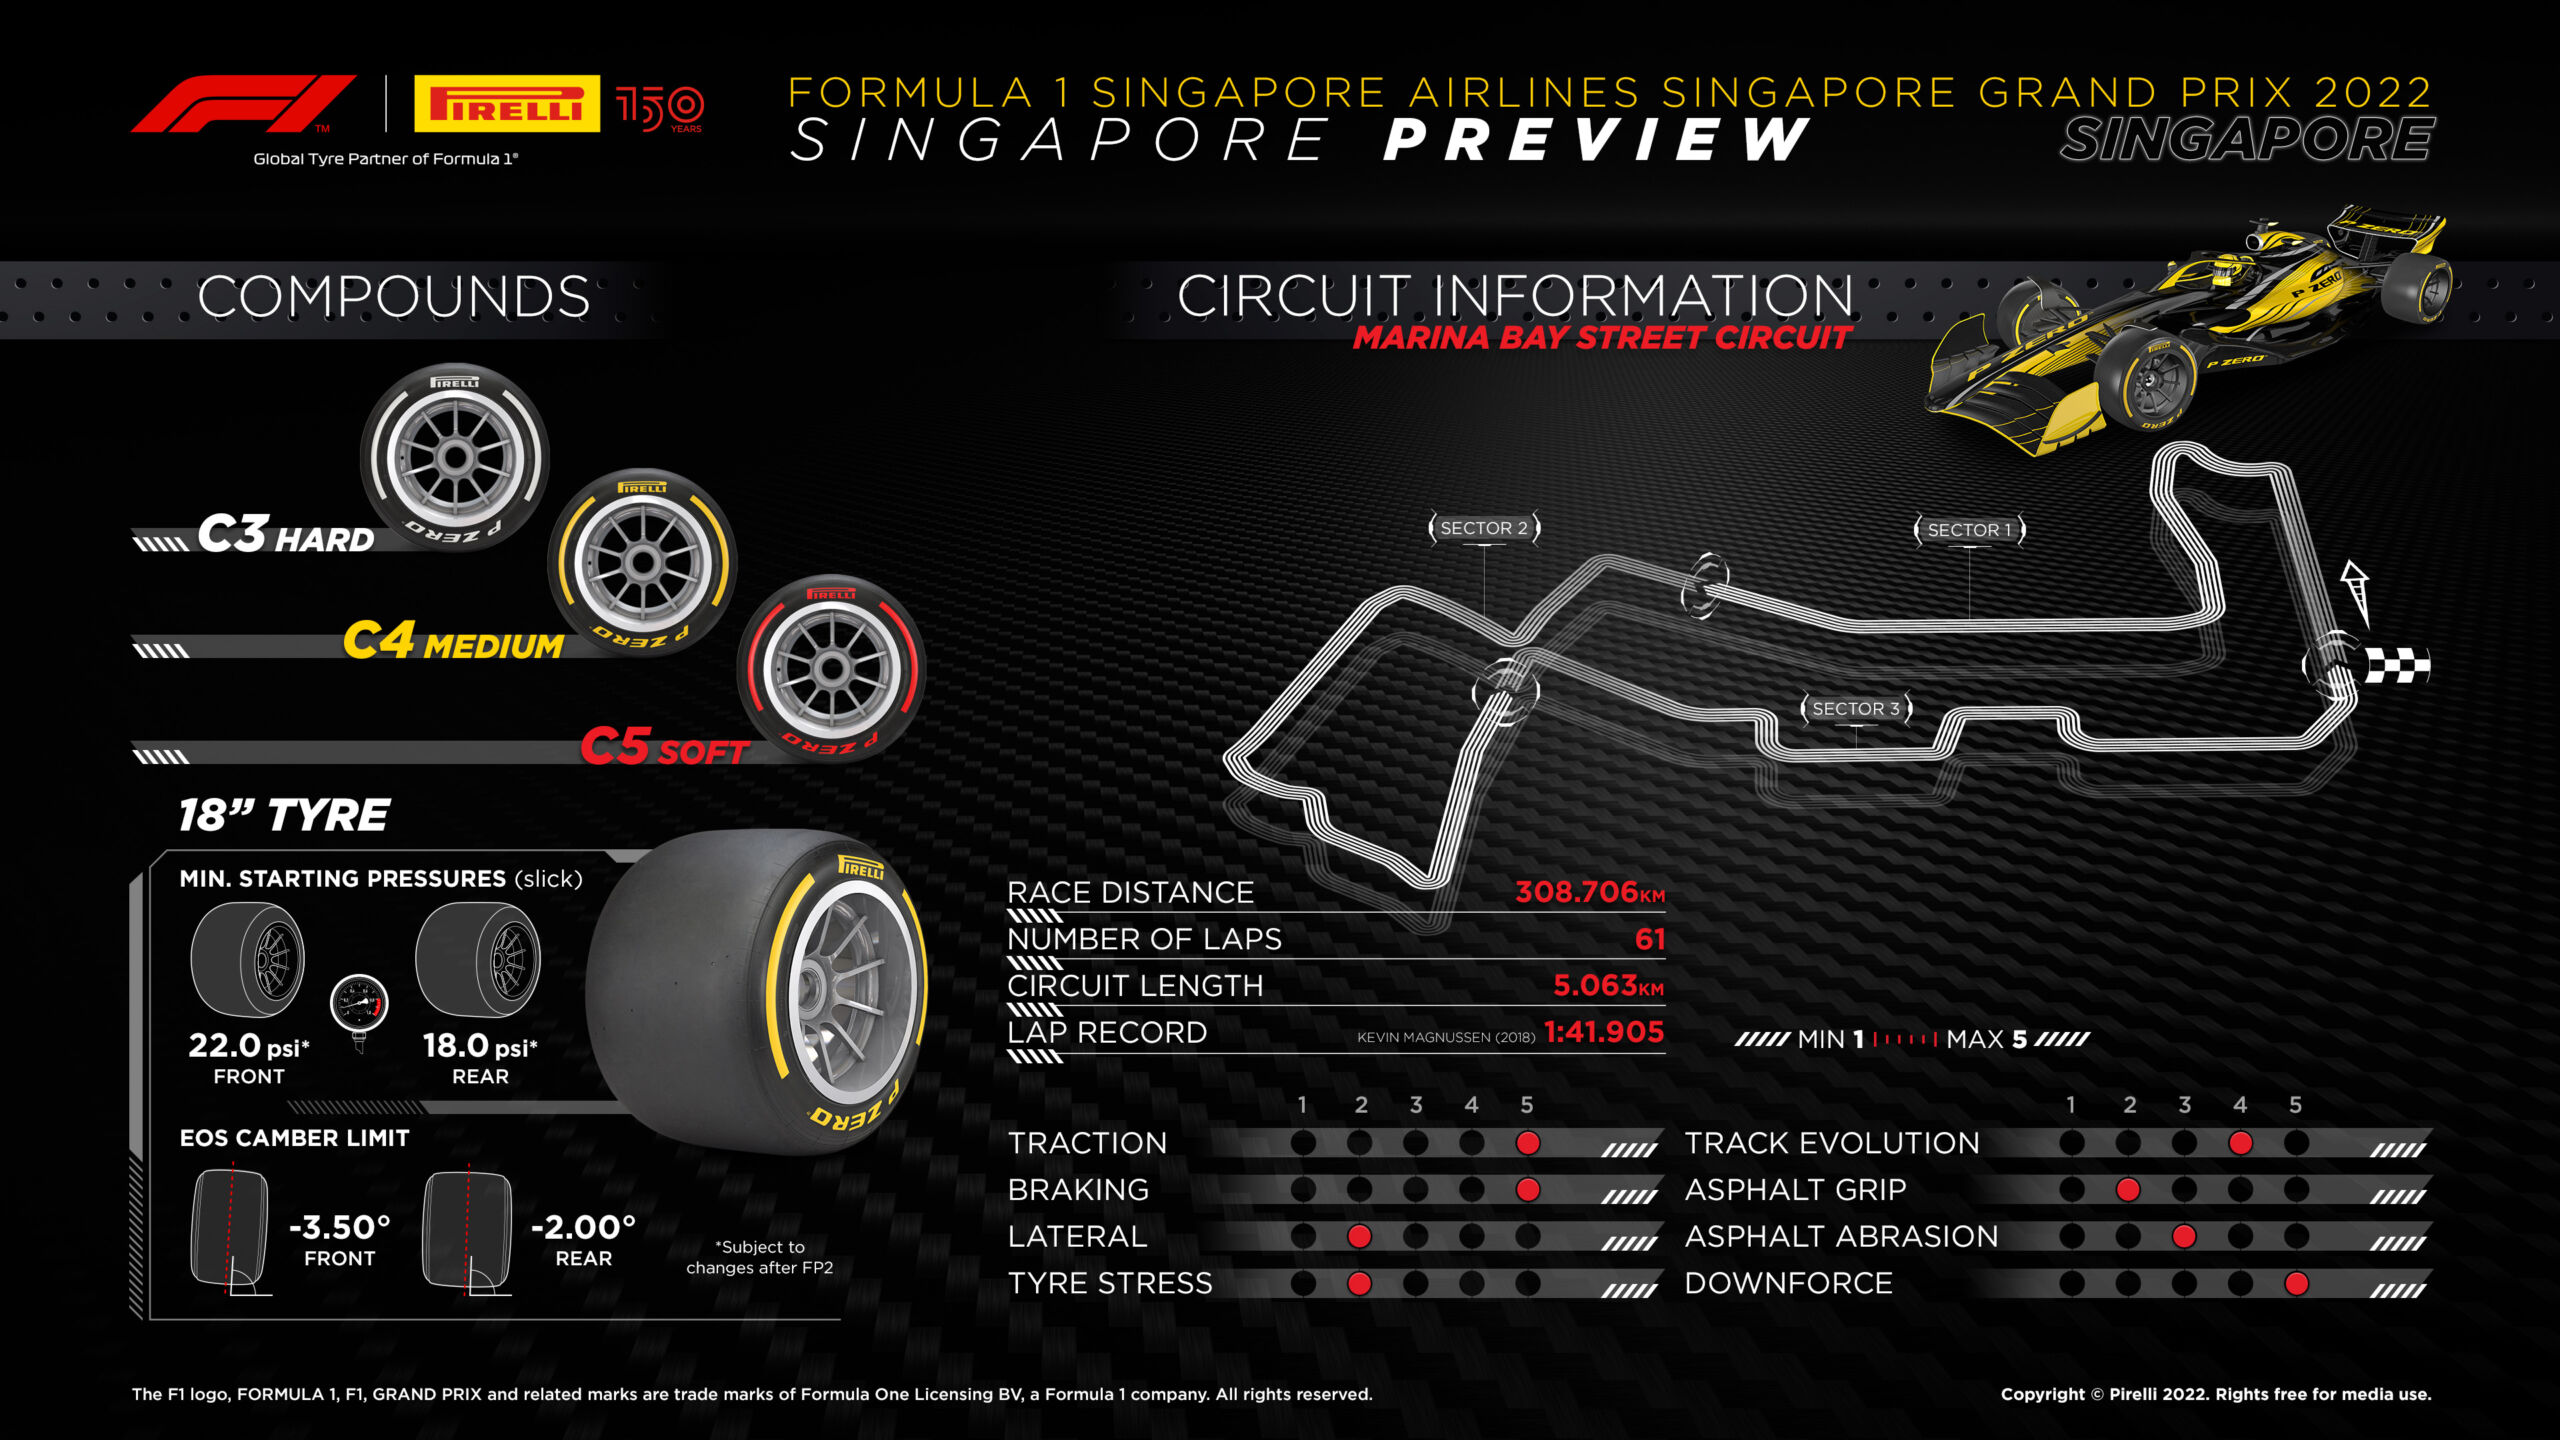 2022 Singapore Grand Prix Tyre Compounds